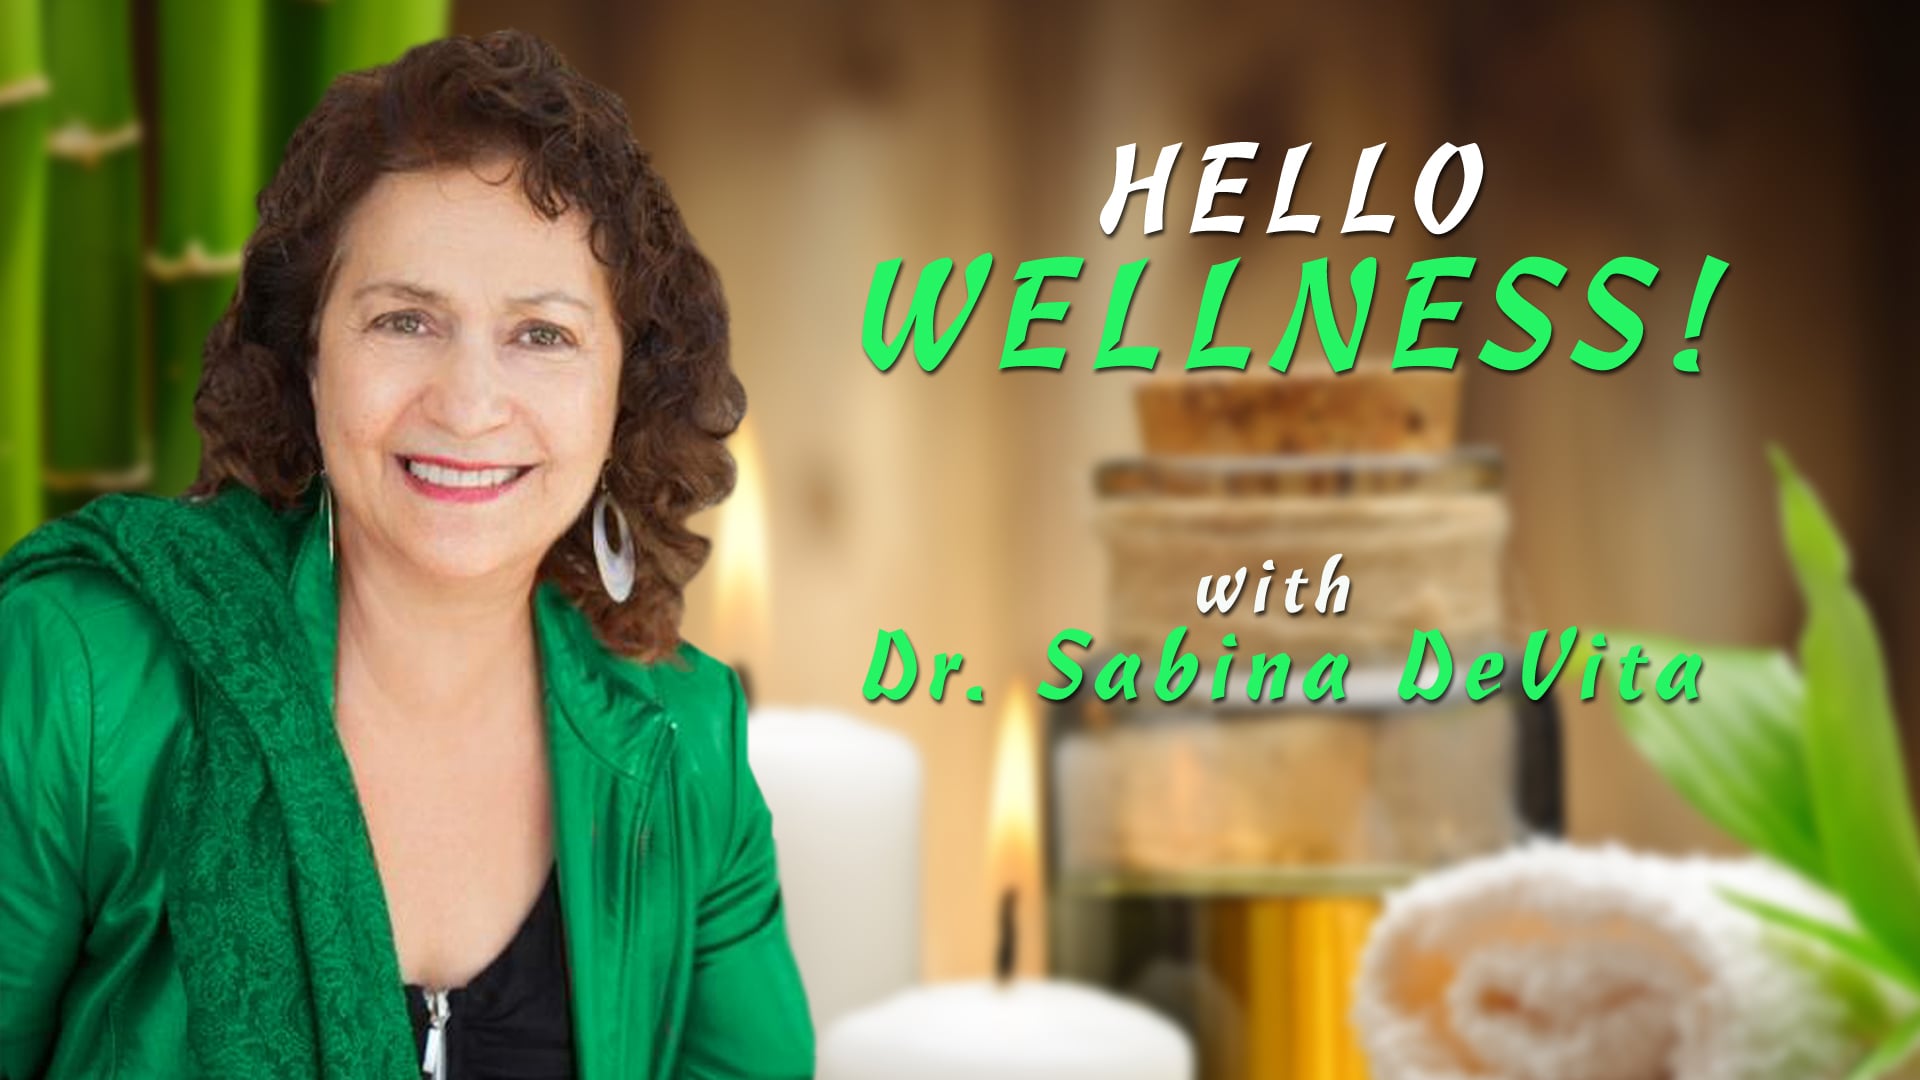 Hello Wellness! The Awareness Mirror.